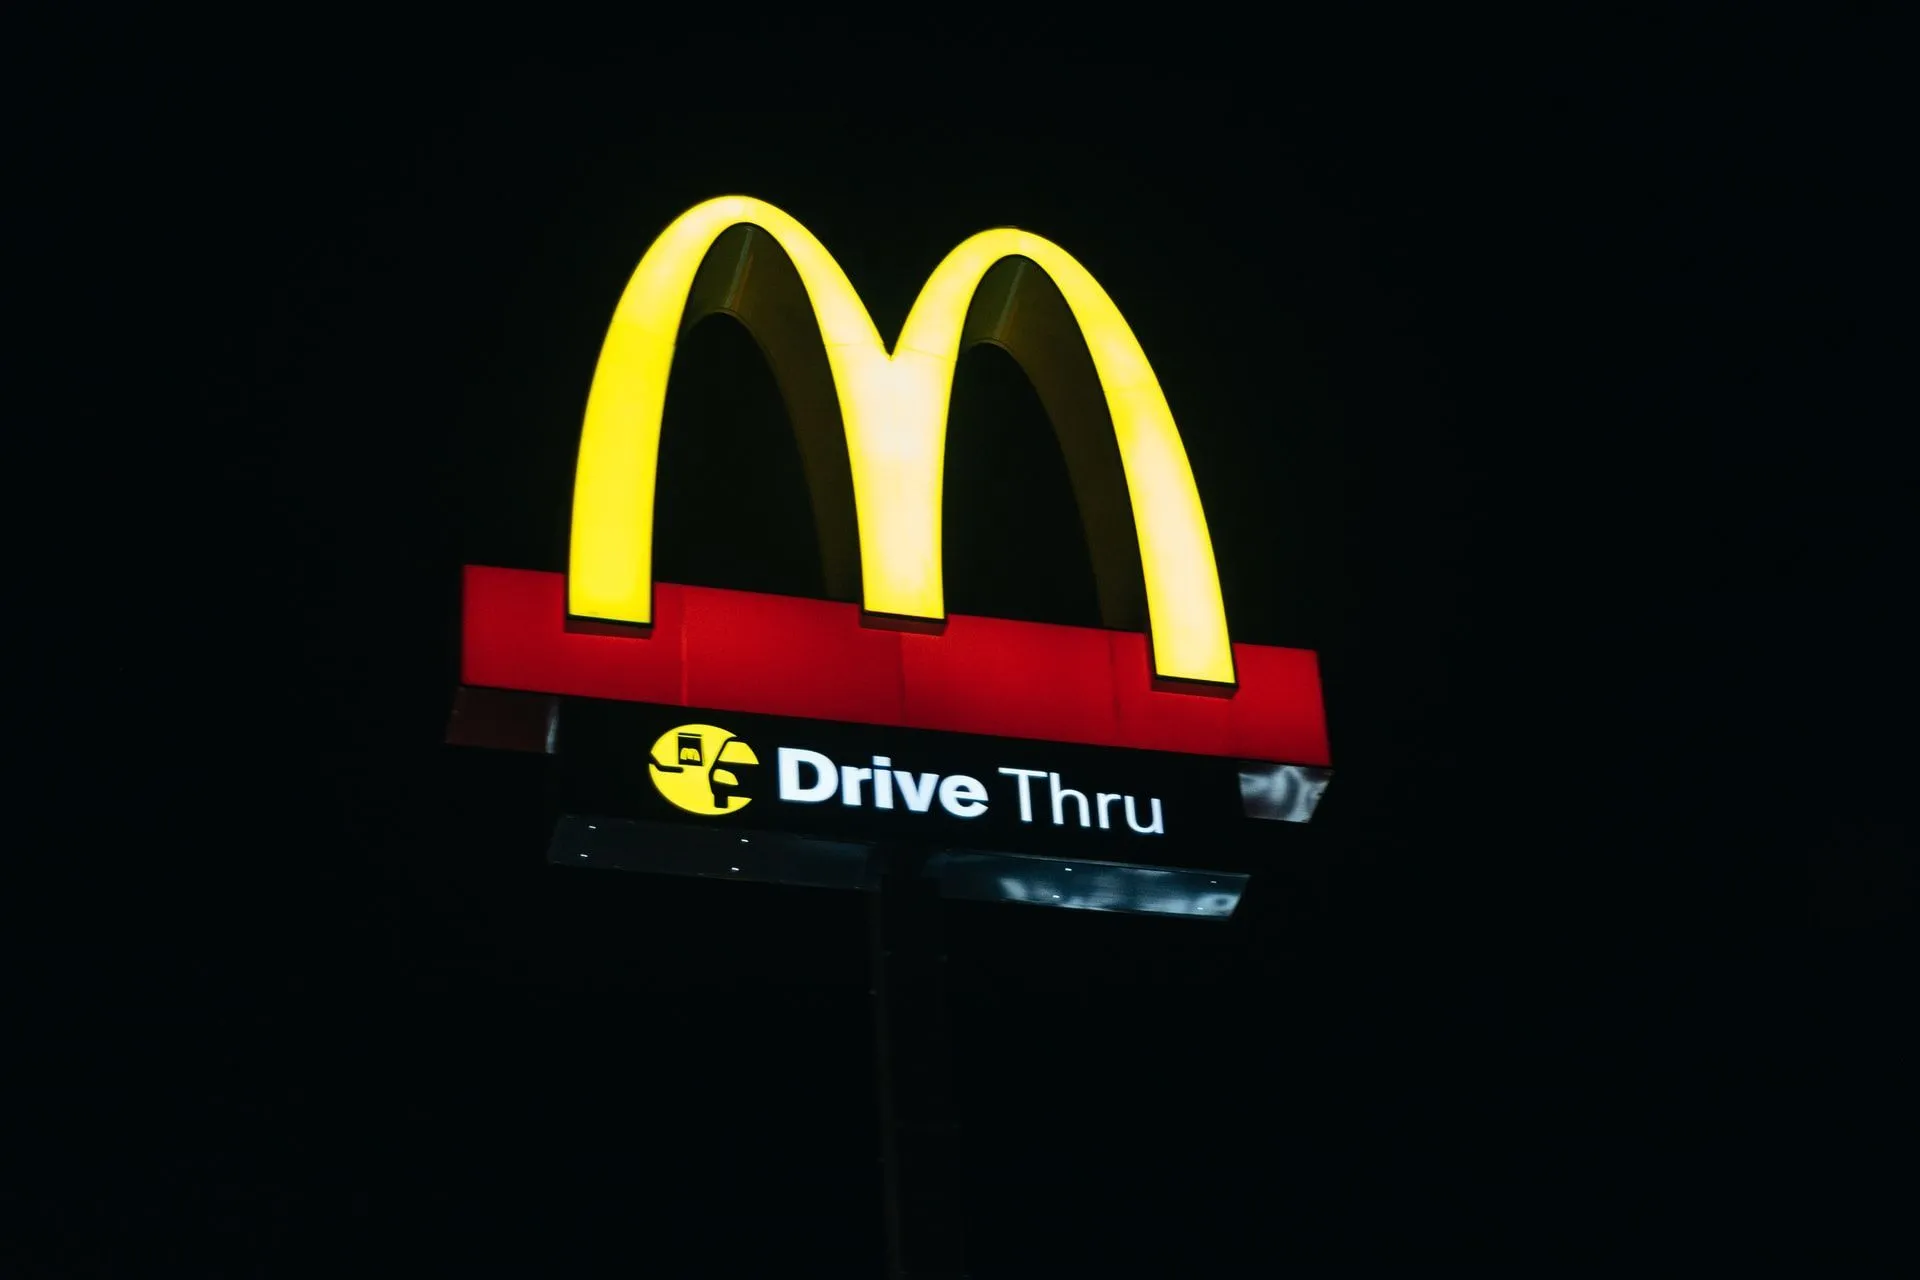 The McDonalds logo is yellow.